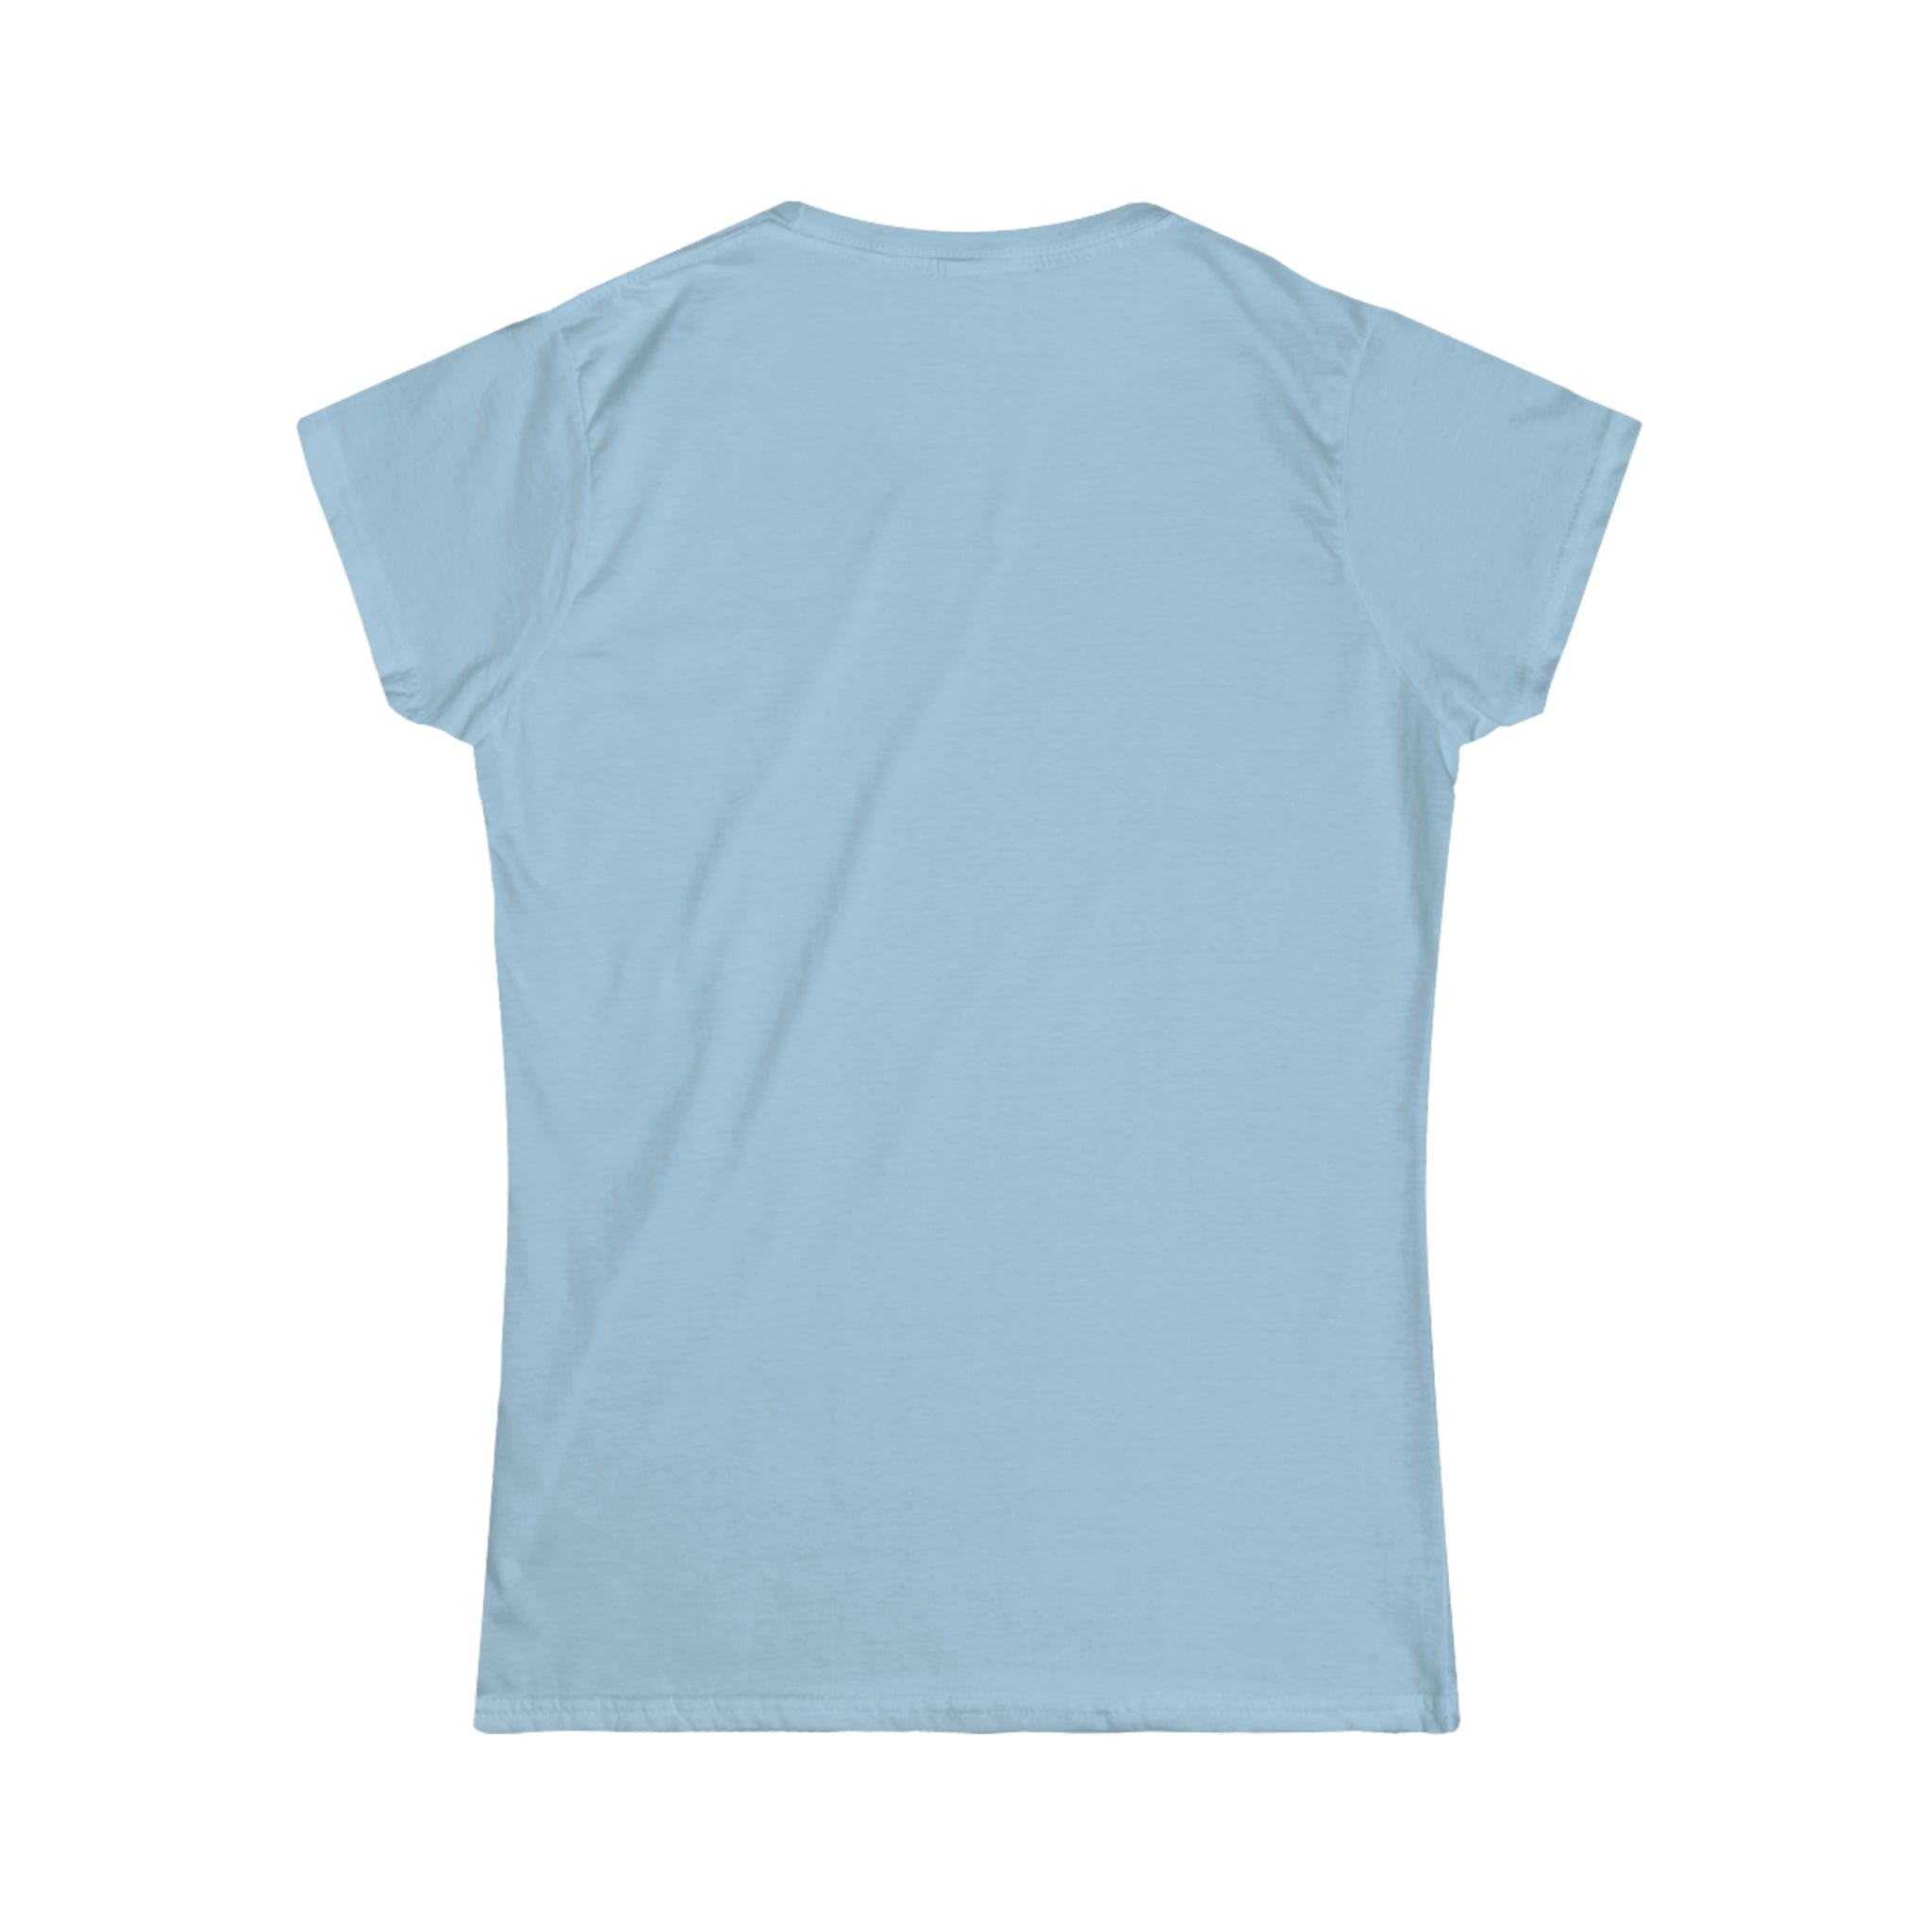 Printify T-Shirt Sleepy Sloth Women's Softstyle Tee - S-2XL